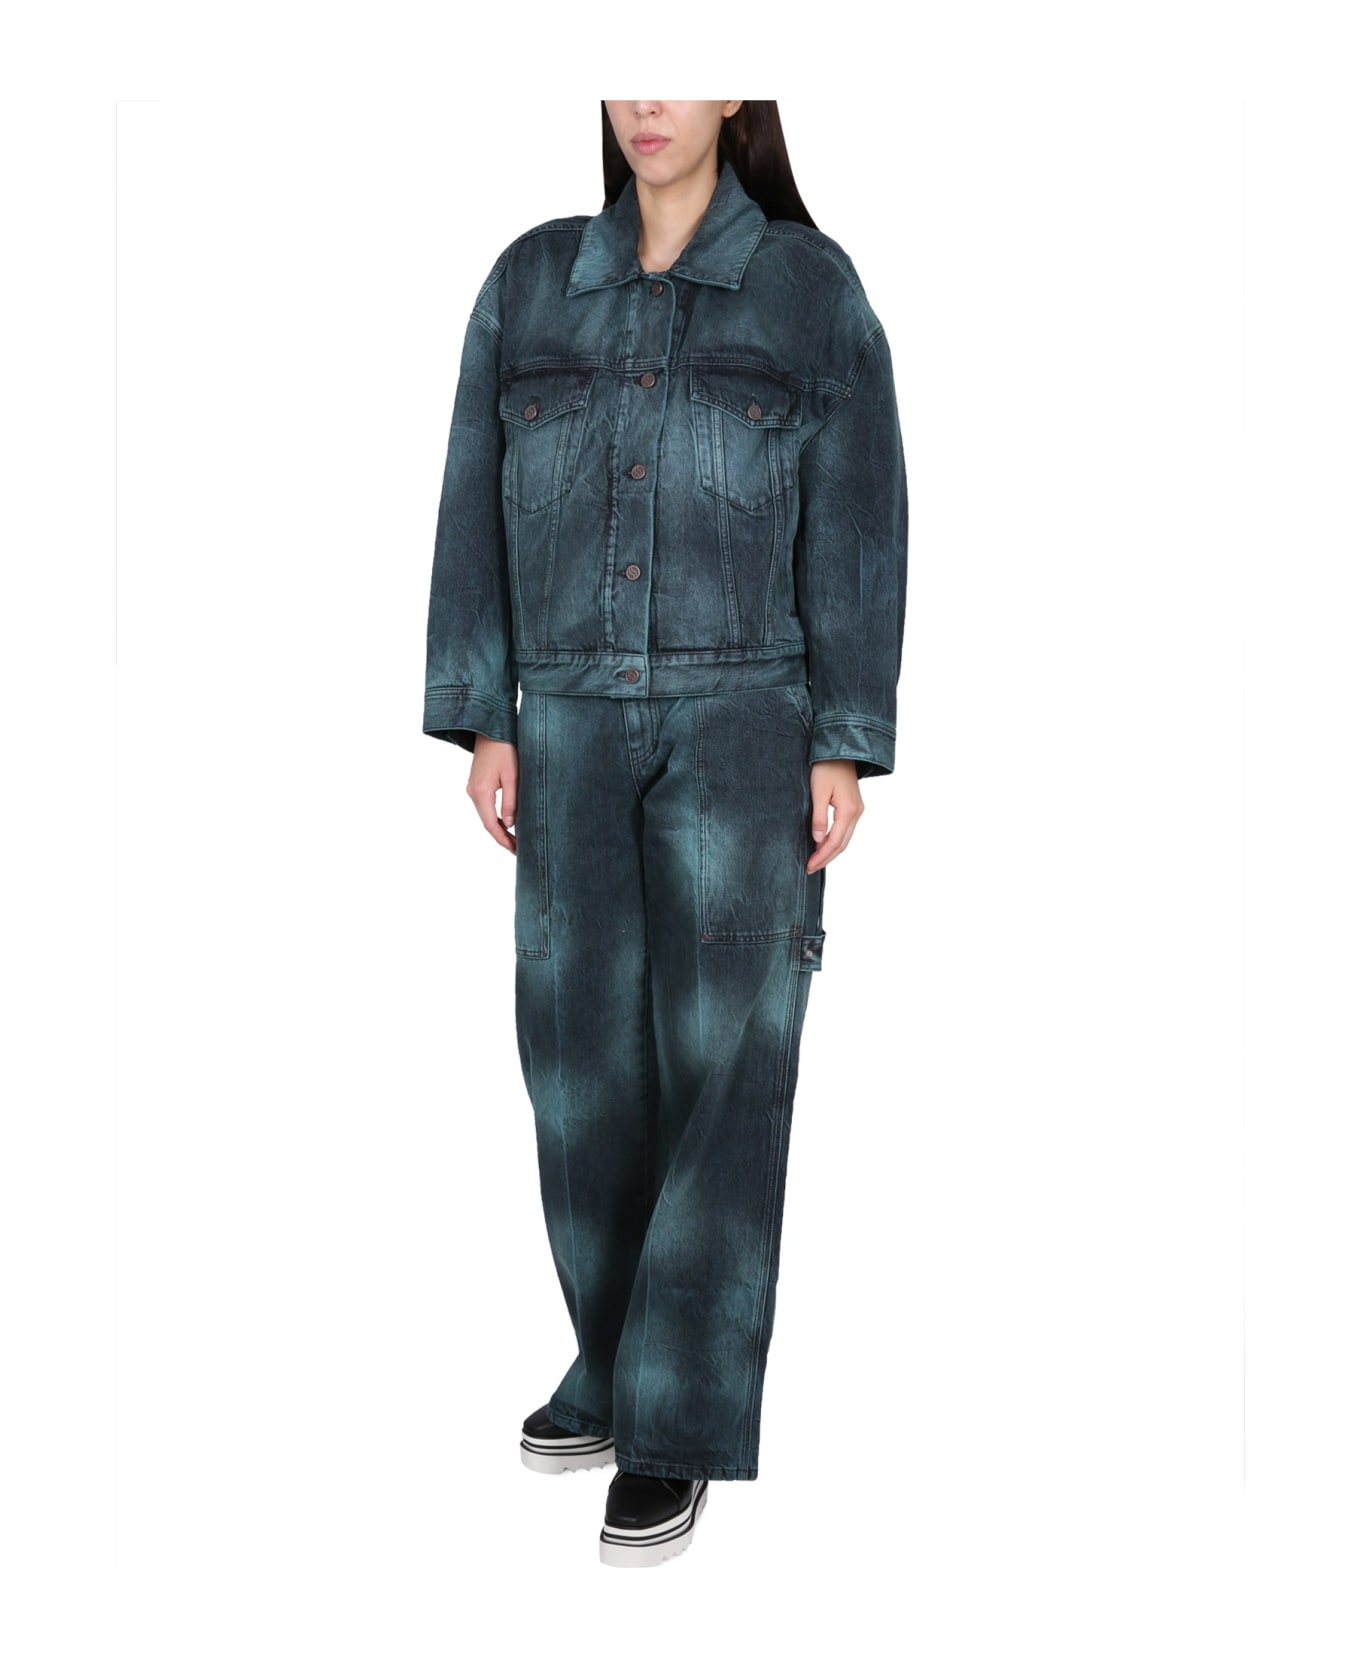 Stella McCartney Jeans Workwear - green デニム